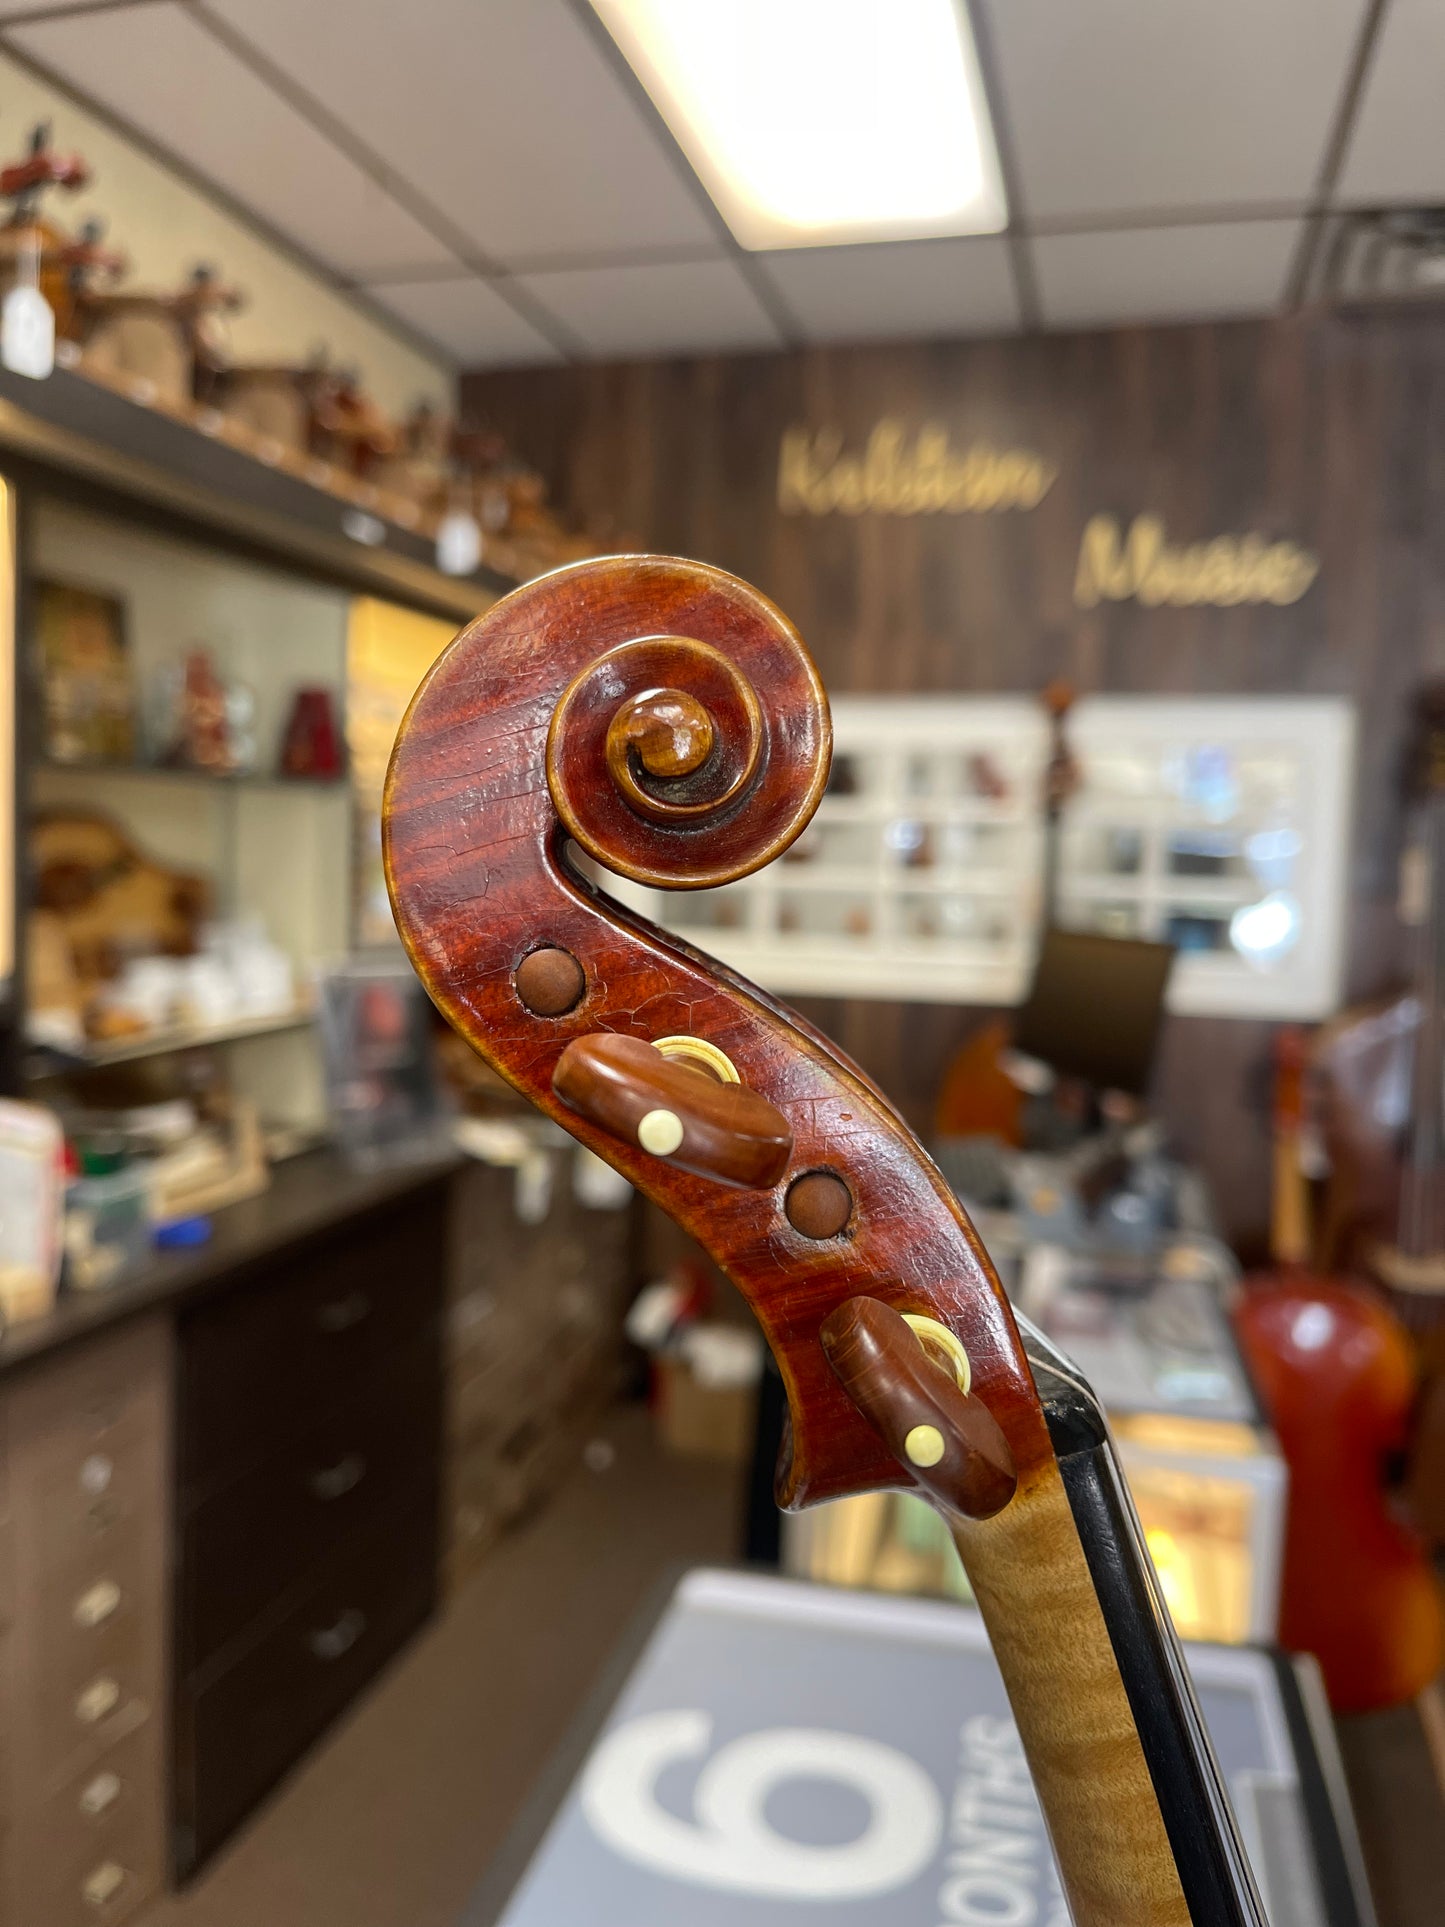 Longiaru Italian Violin